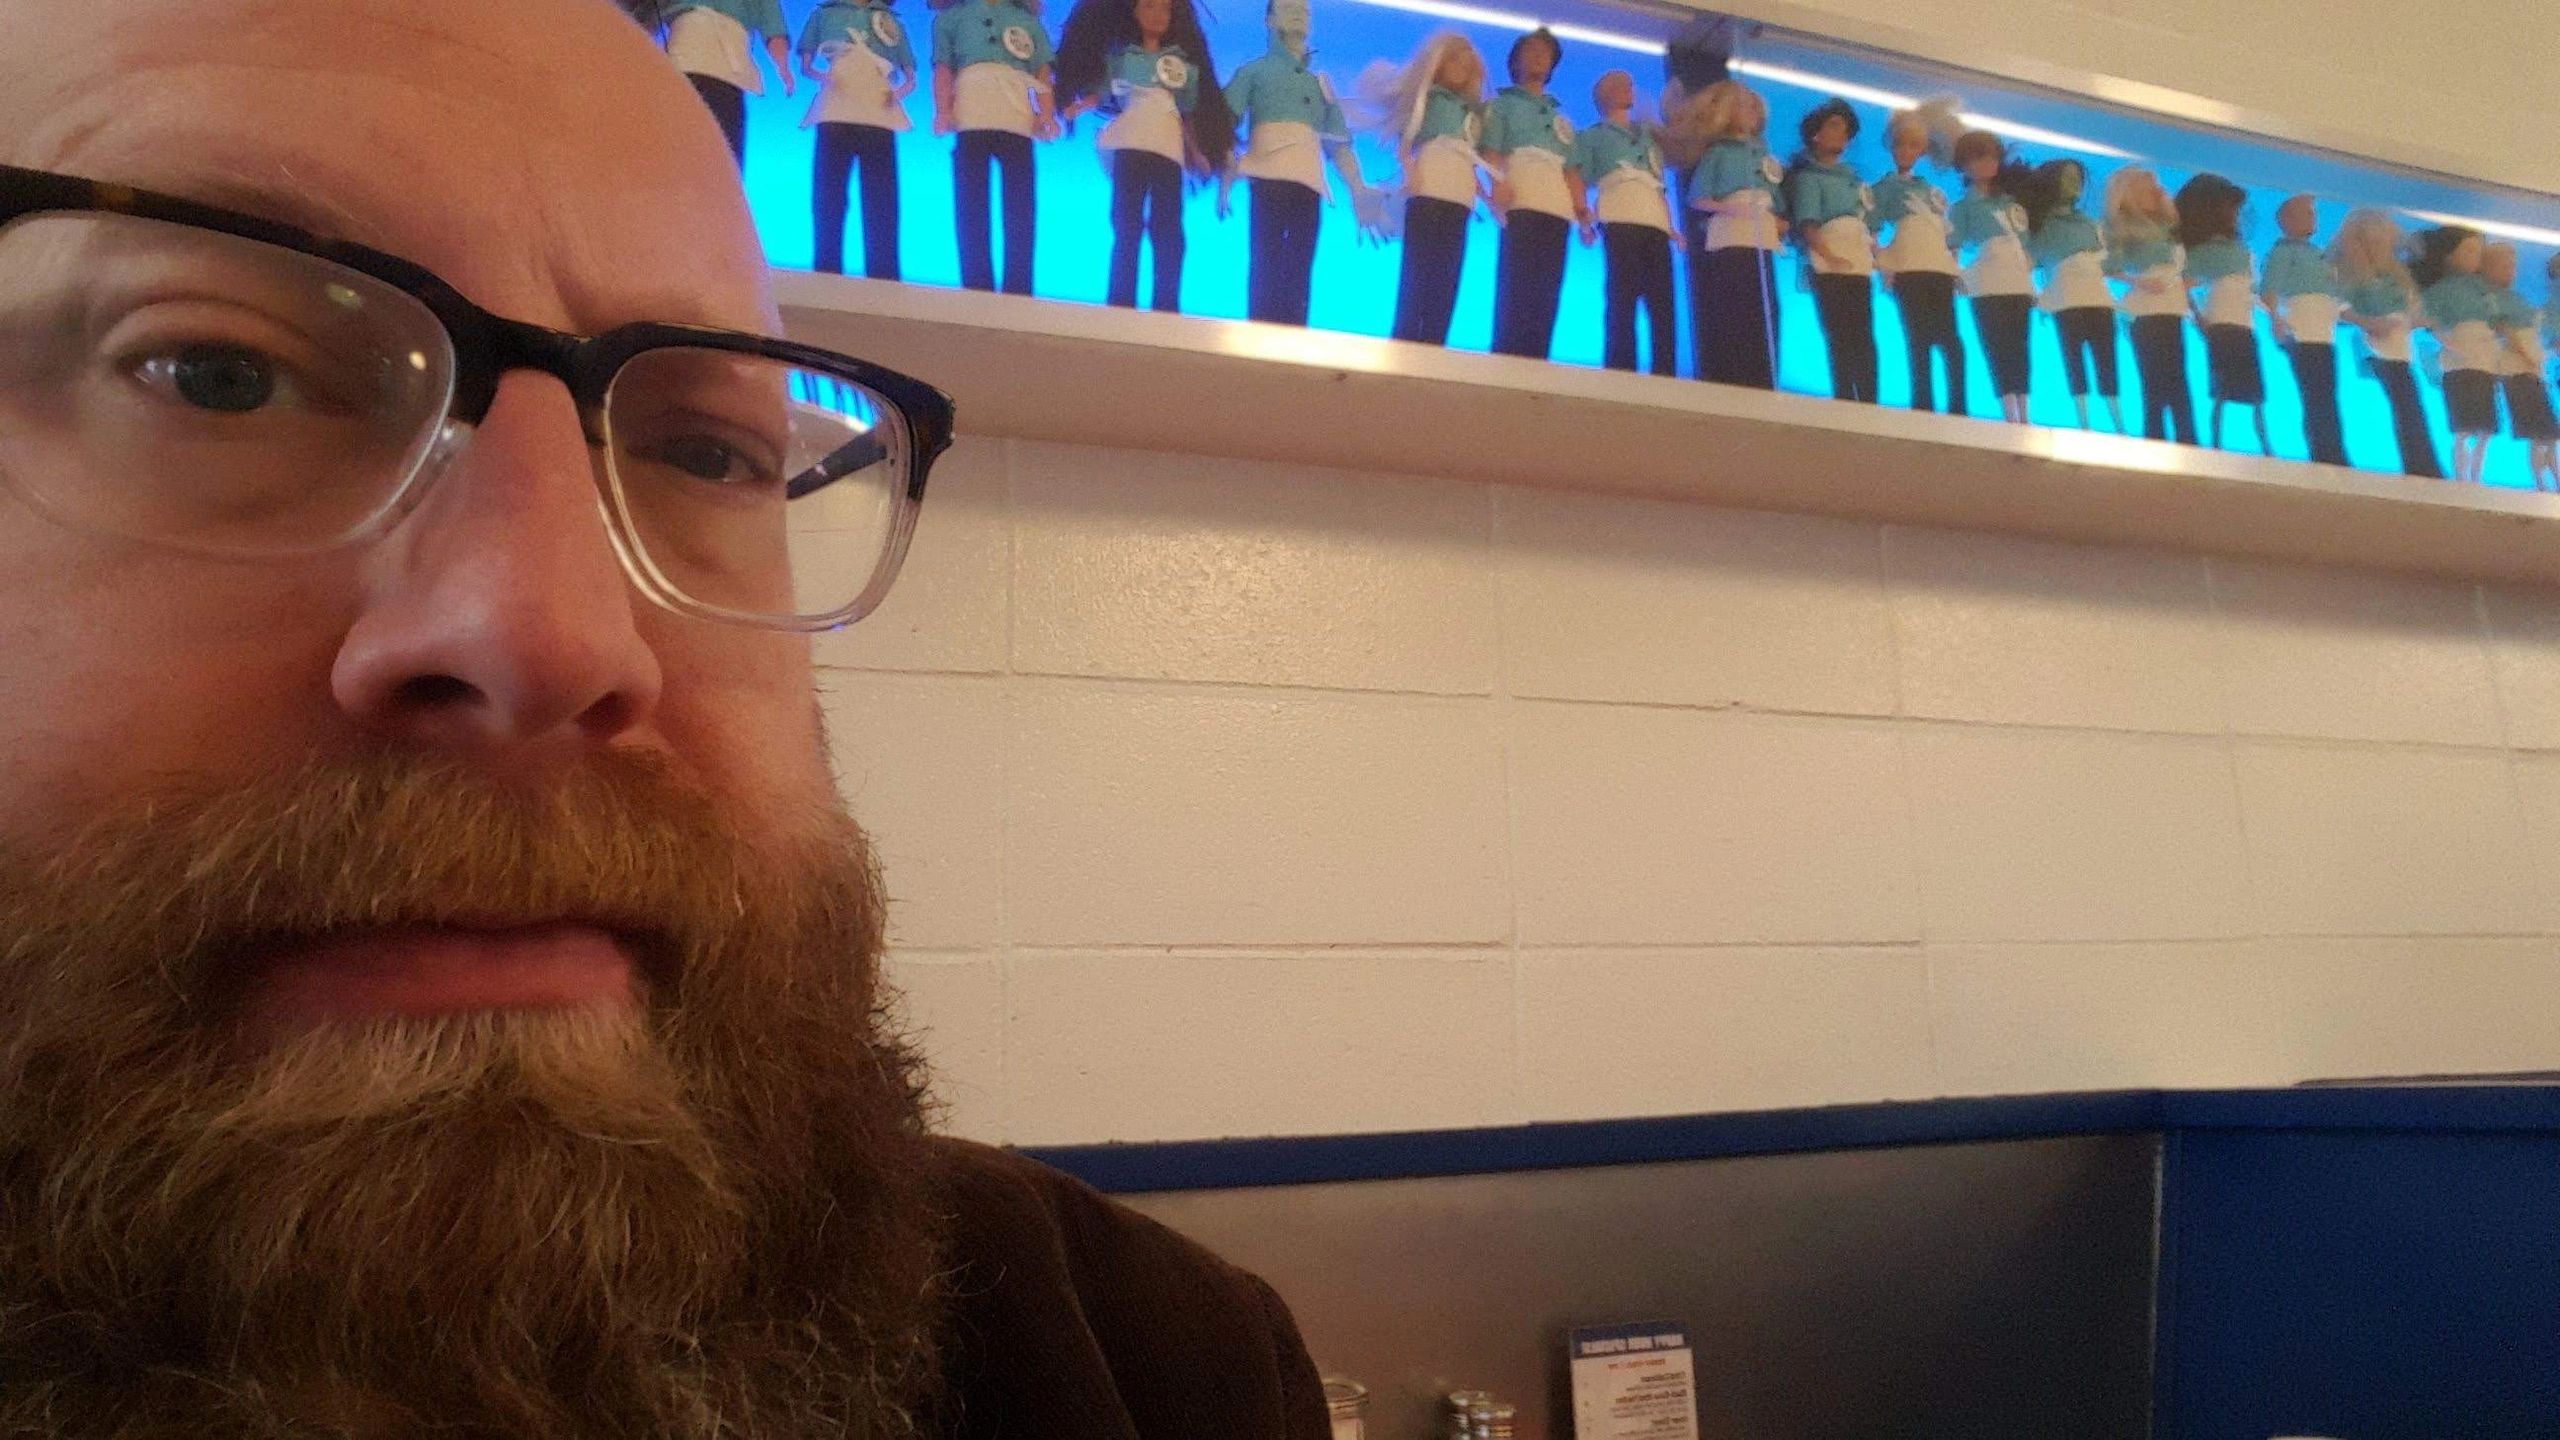 David Leitner in front of a shelf of barbie dolls in blue waiter uniforms backlit with blue light.